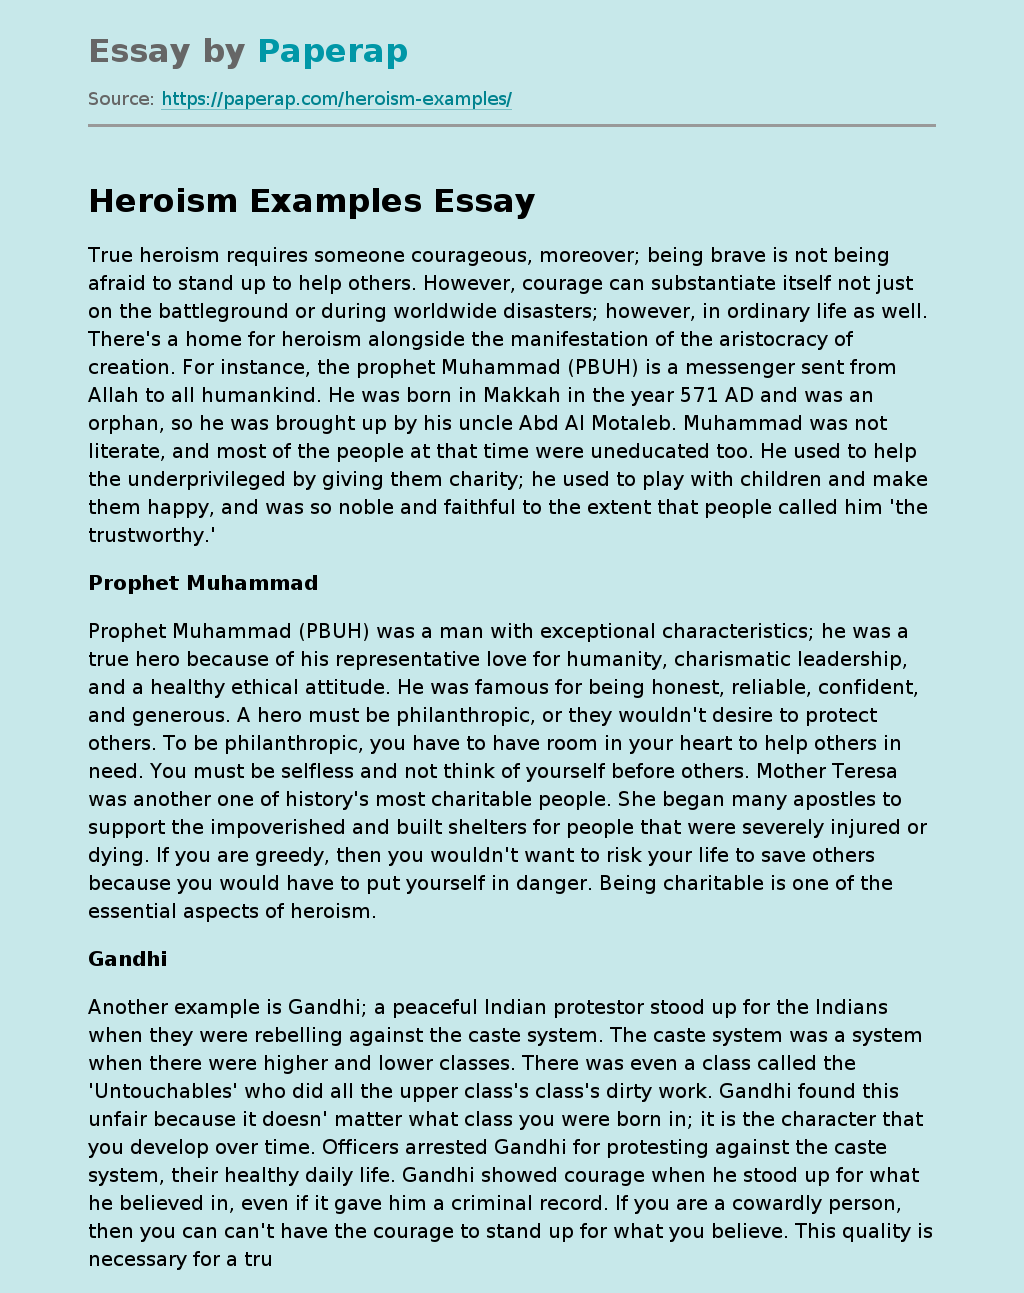 heroic traits essay